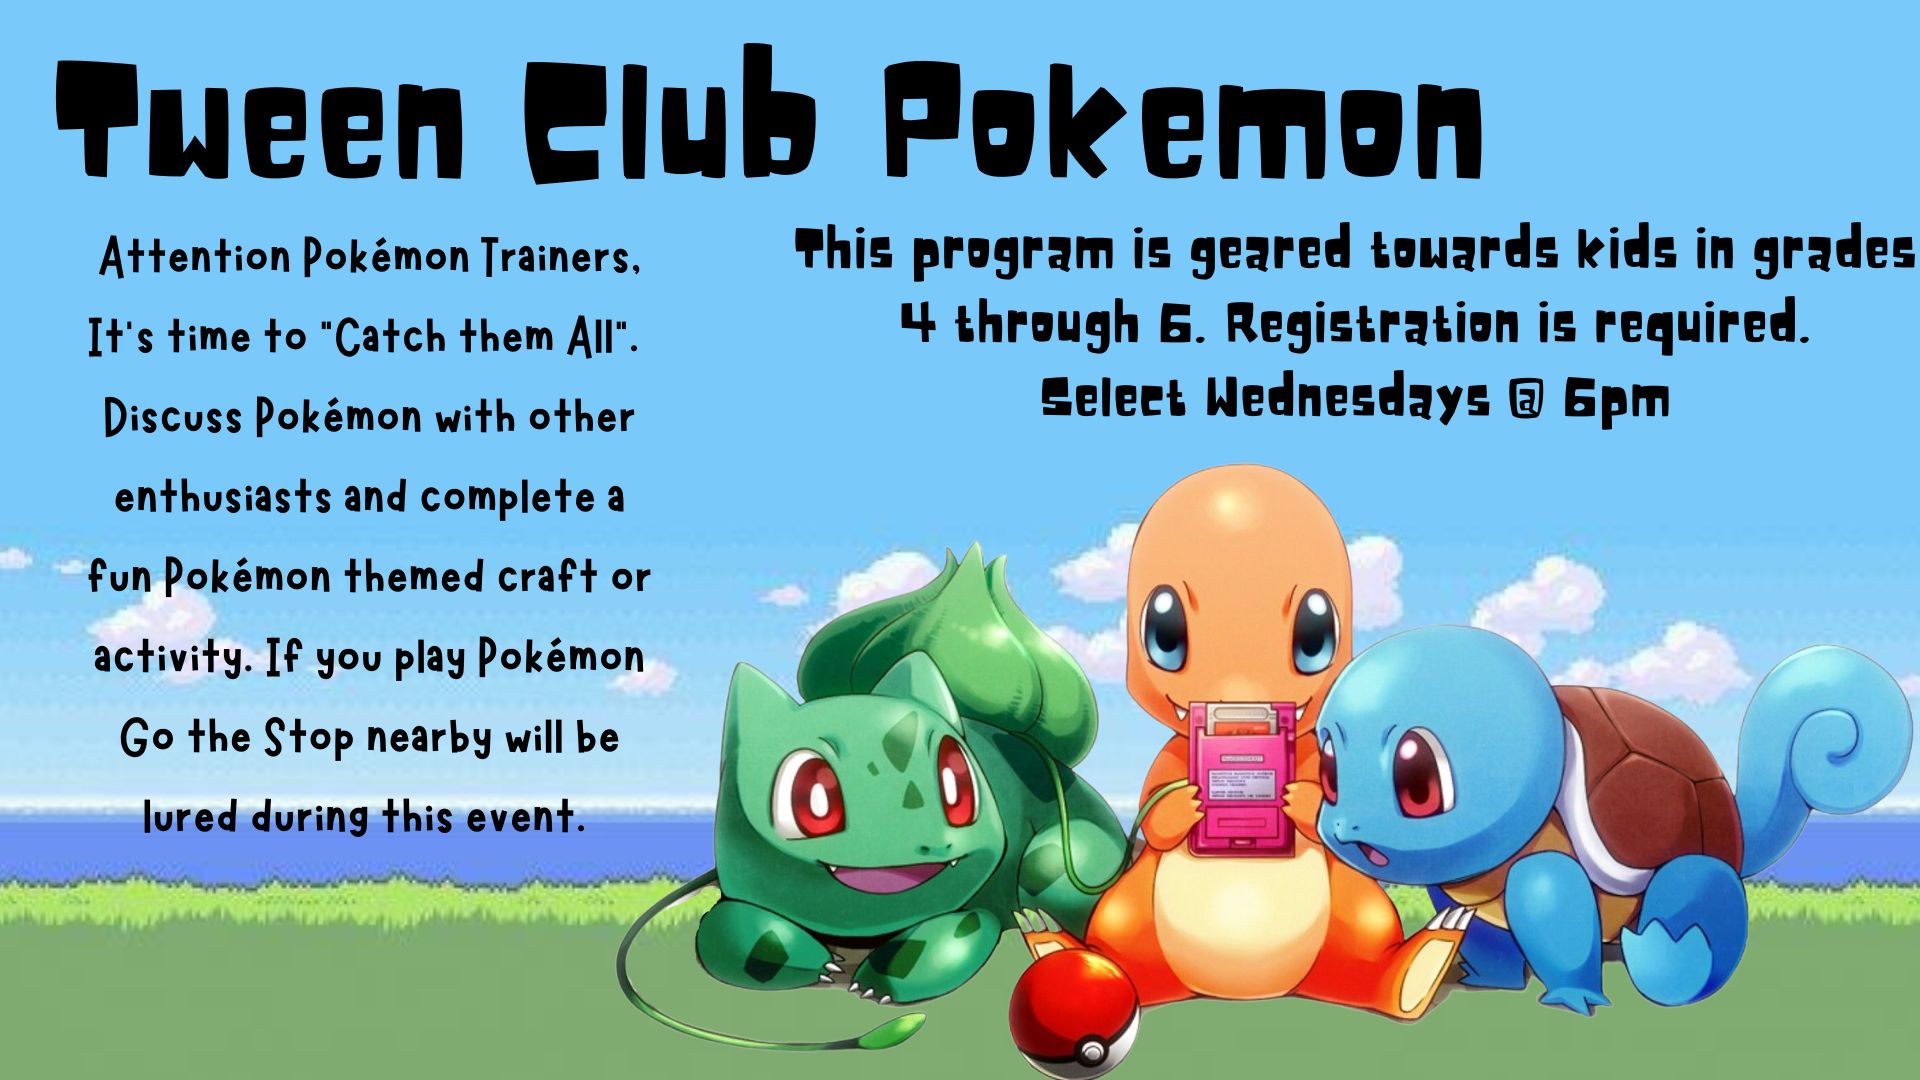 Flyer for Tween Club Pokemon